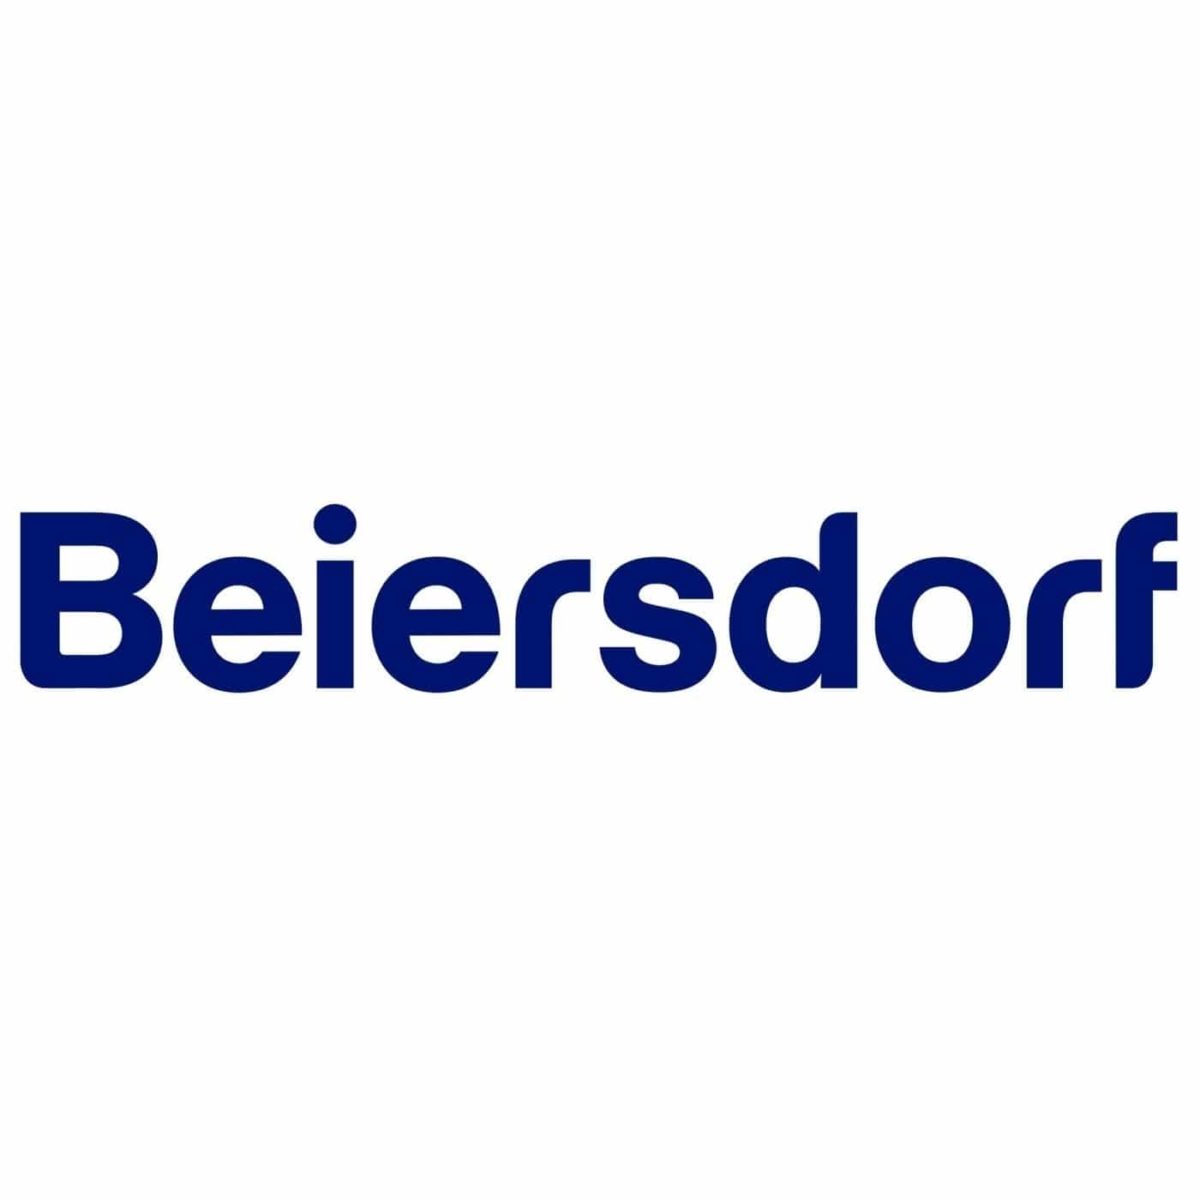 Beiersdorf_LEED_DGNB_BREEAM_WELL_Ökobilanz